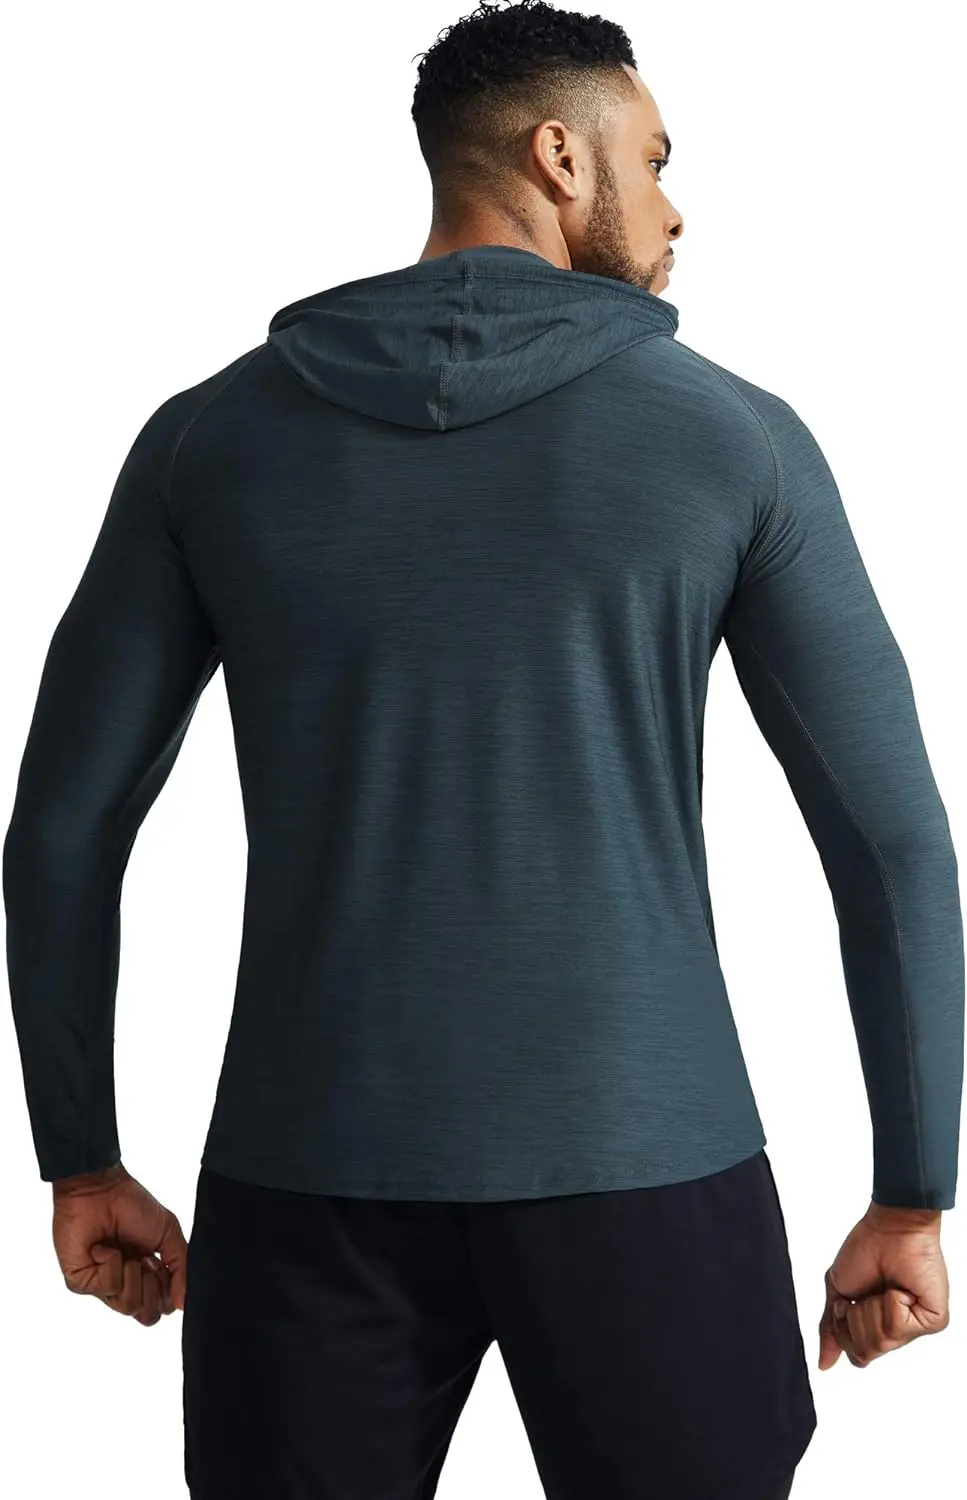 NELEUS Mens 2 Pack Dry Fit Running Shirt Long Sleeve Workout